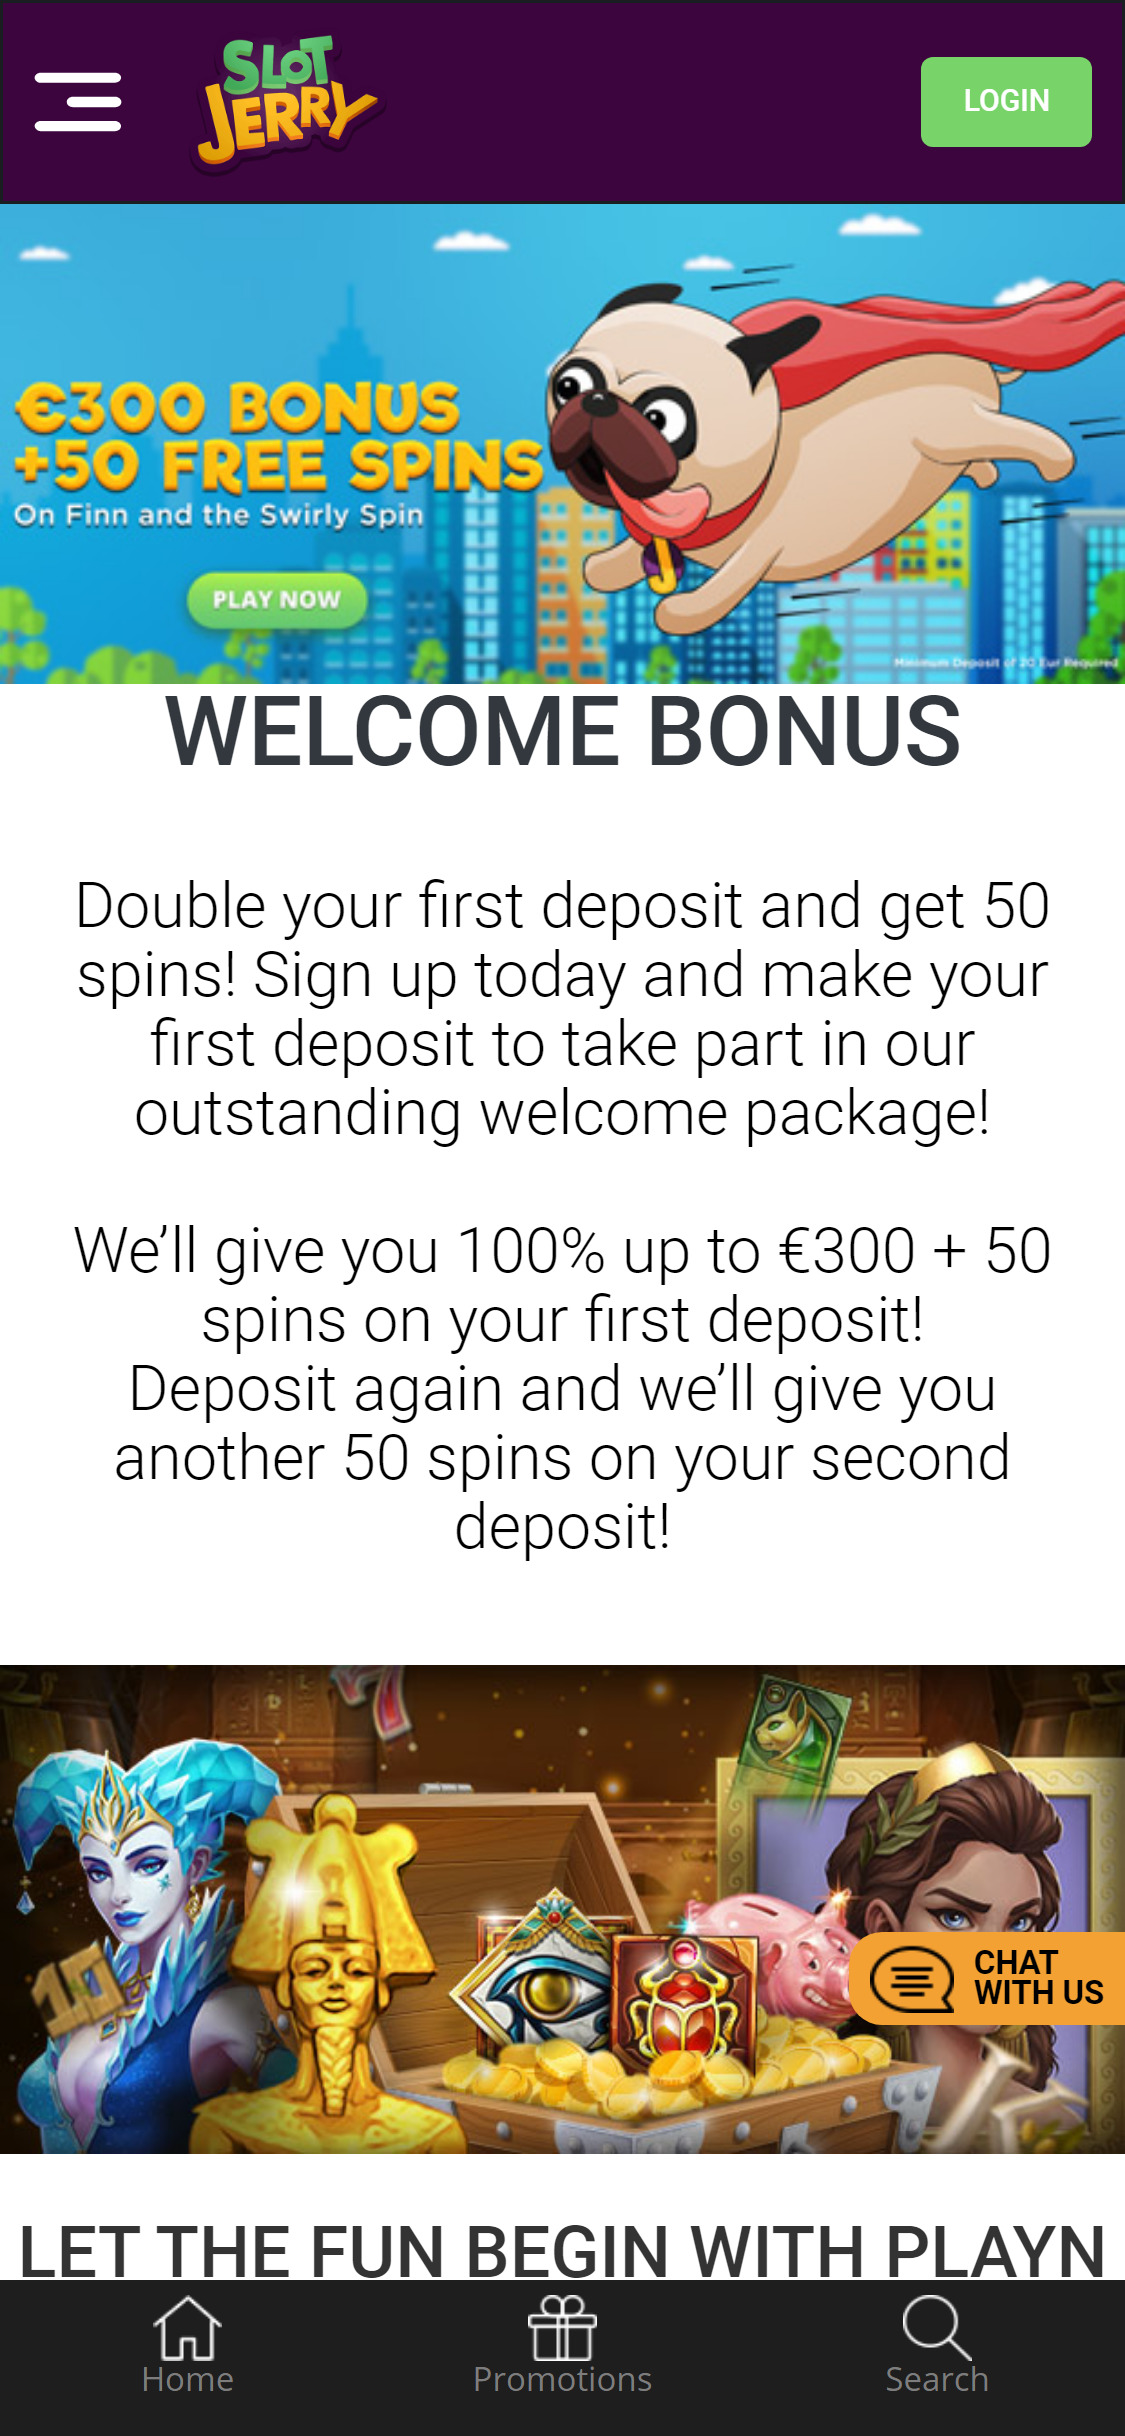 Slotjerry Casino Mobile No Deposit Bonus Review